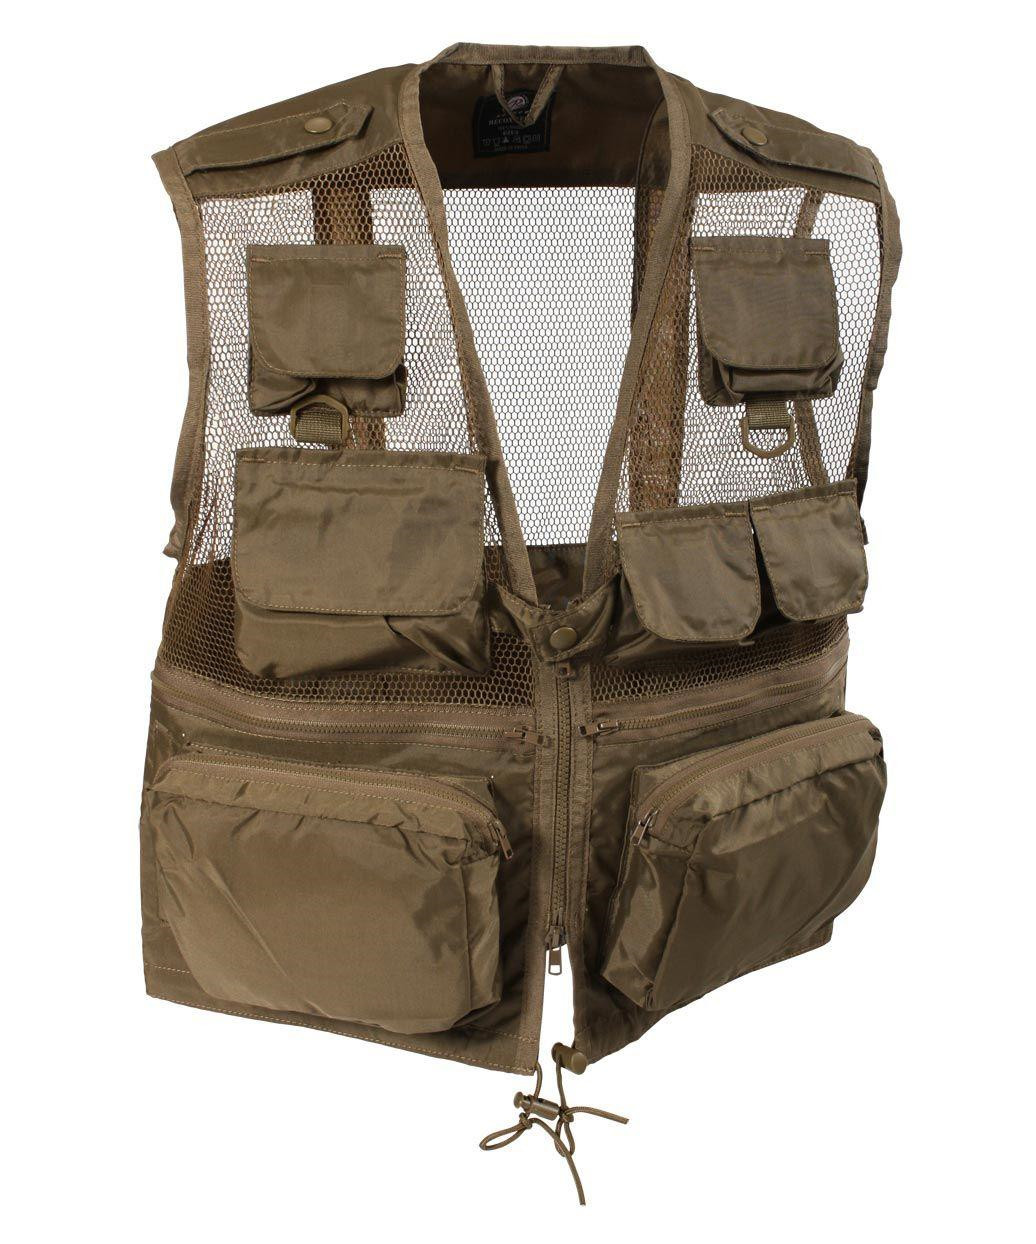 5: Rothco Taktisk Recon Vest (Coyote Brun, XL)